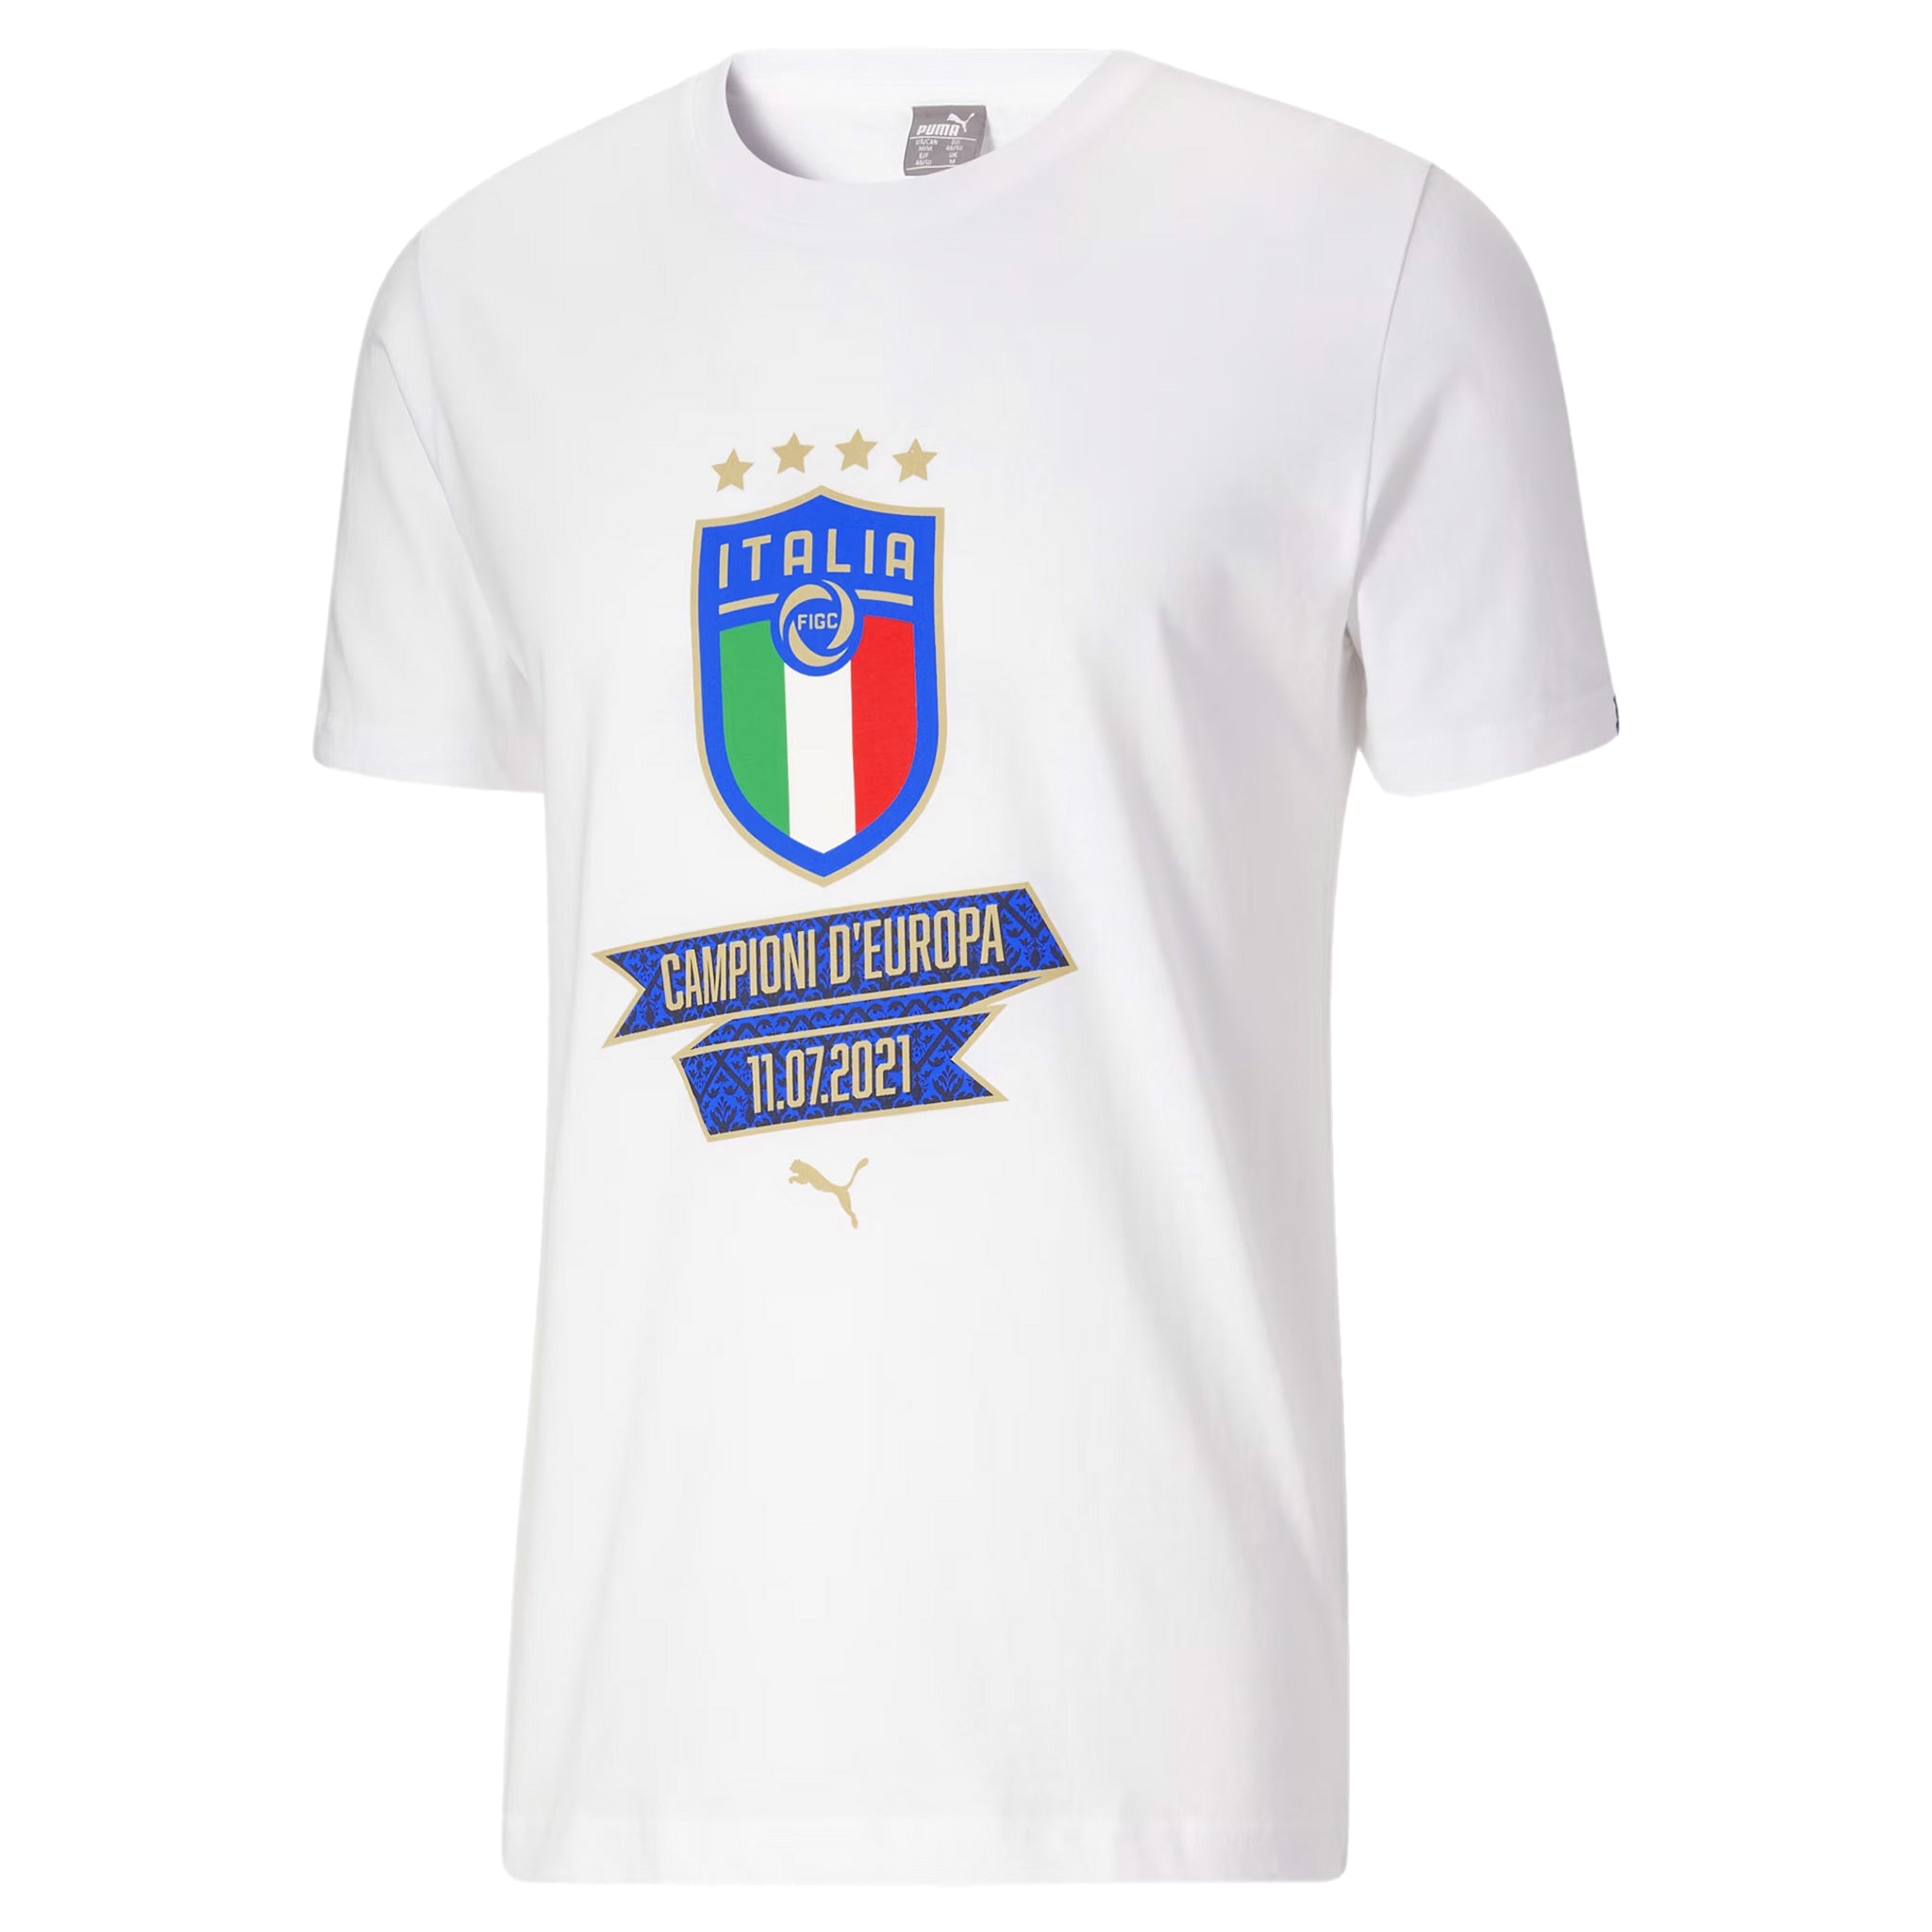 Italy FIGC Campioni D'Europa T-Shirt 2021